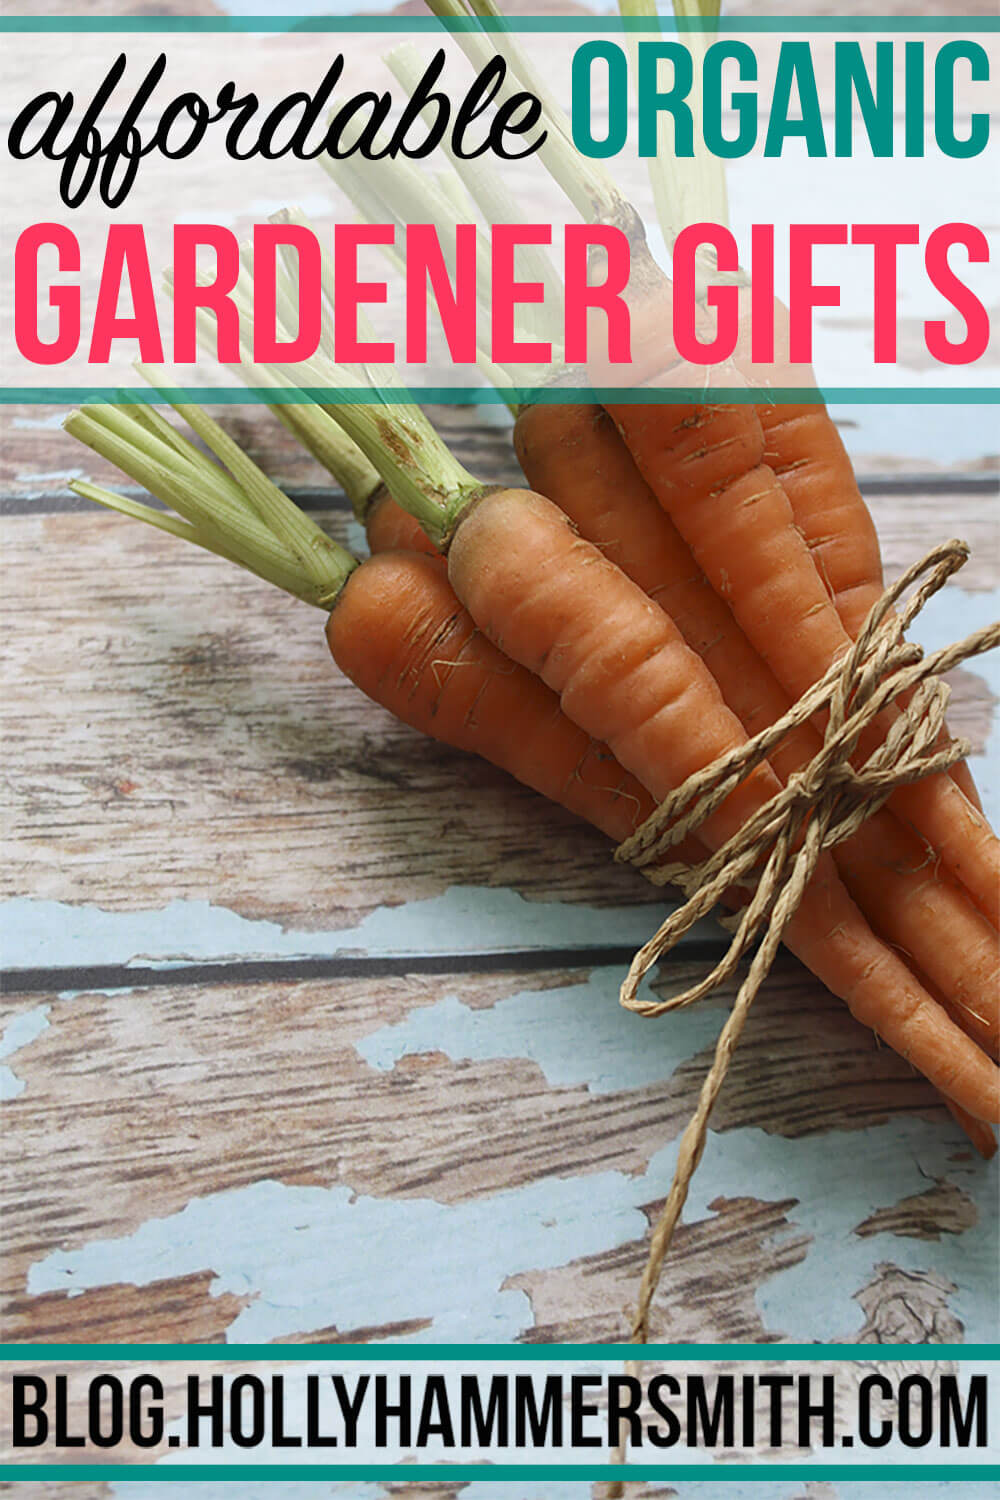 Organic Gardener Gifts